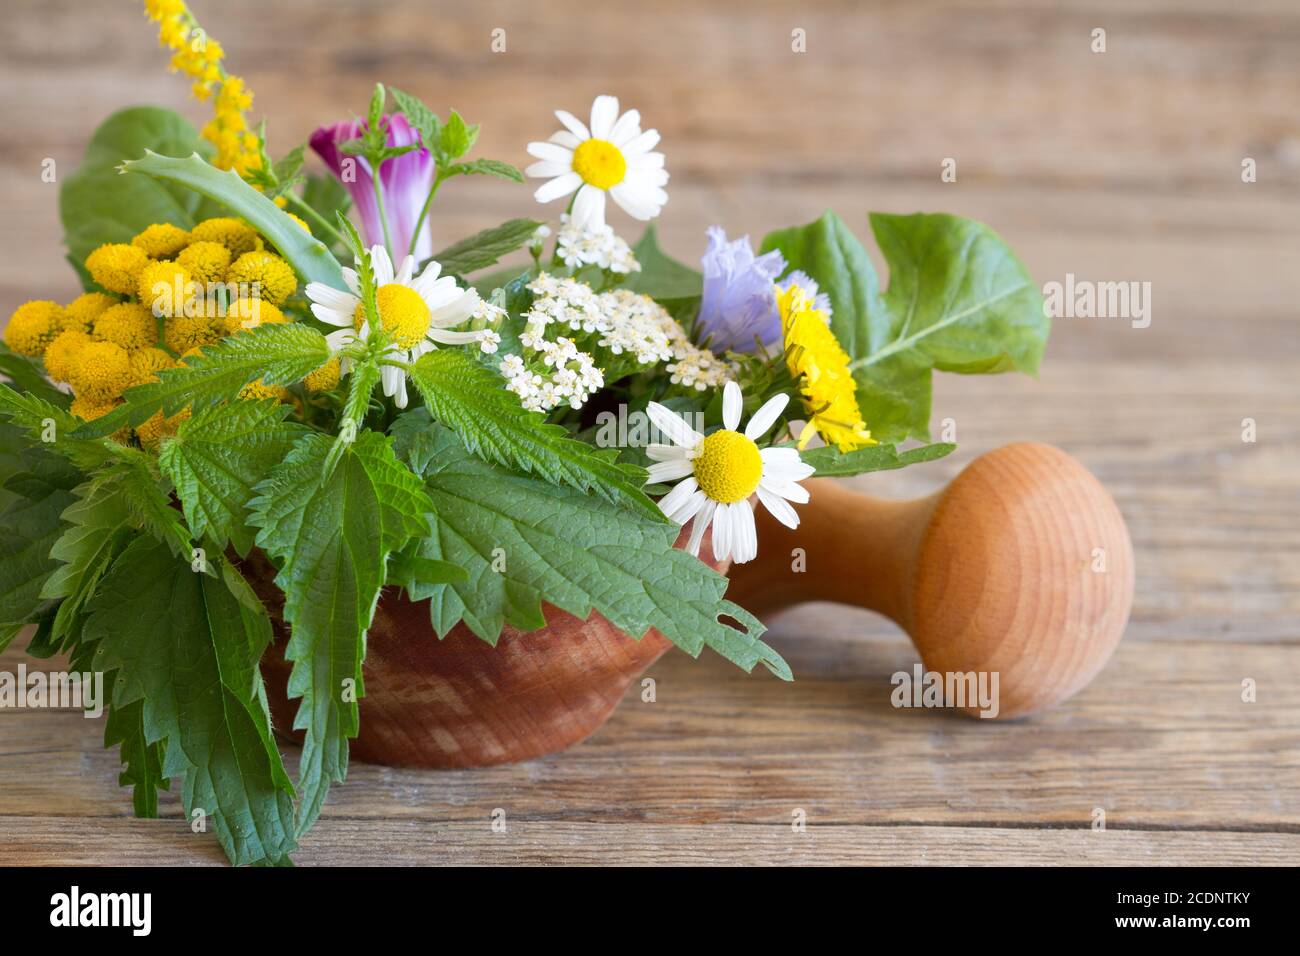 Fresh herbs in the mortar Stock Photo